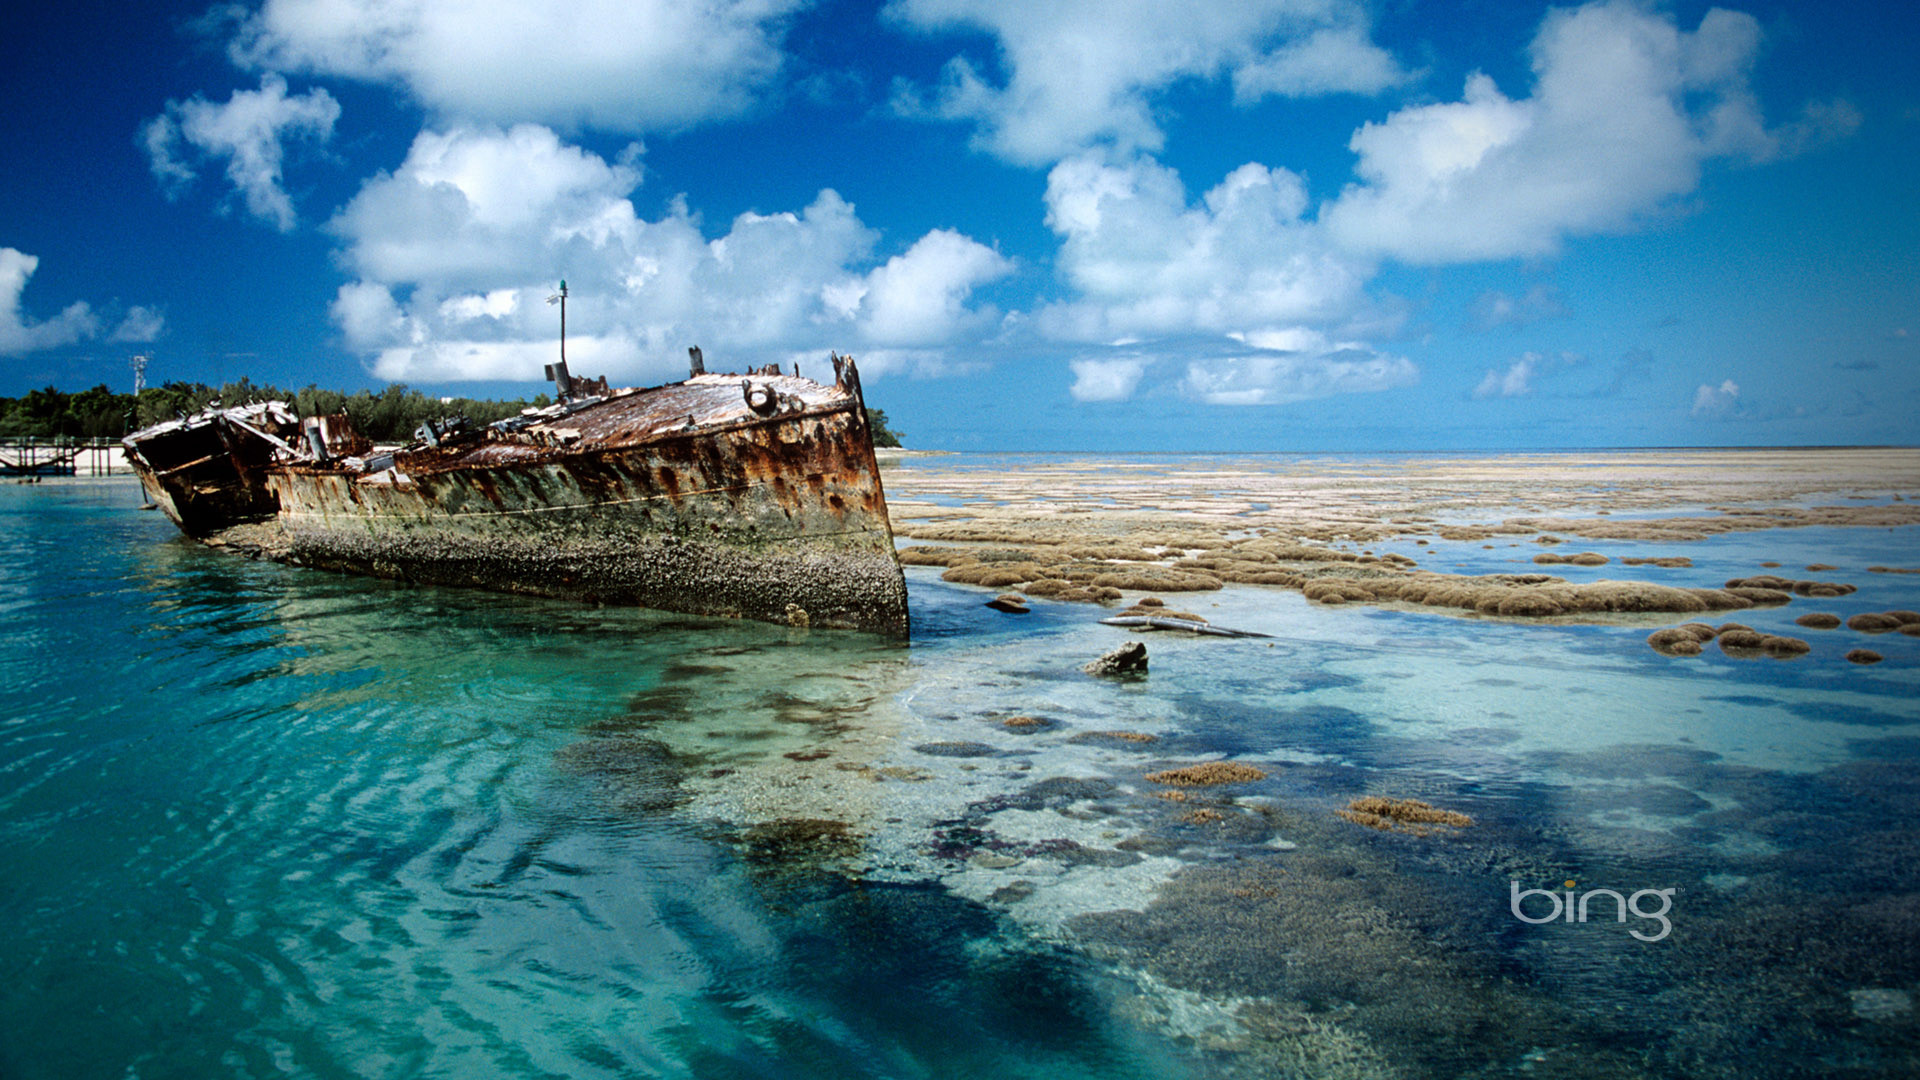 1920x1080 bing pictures desktop background | Bing Shipwreck on Heron Island, desktop  background, Australia,